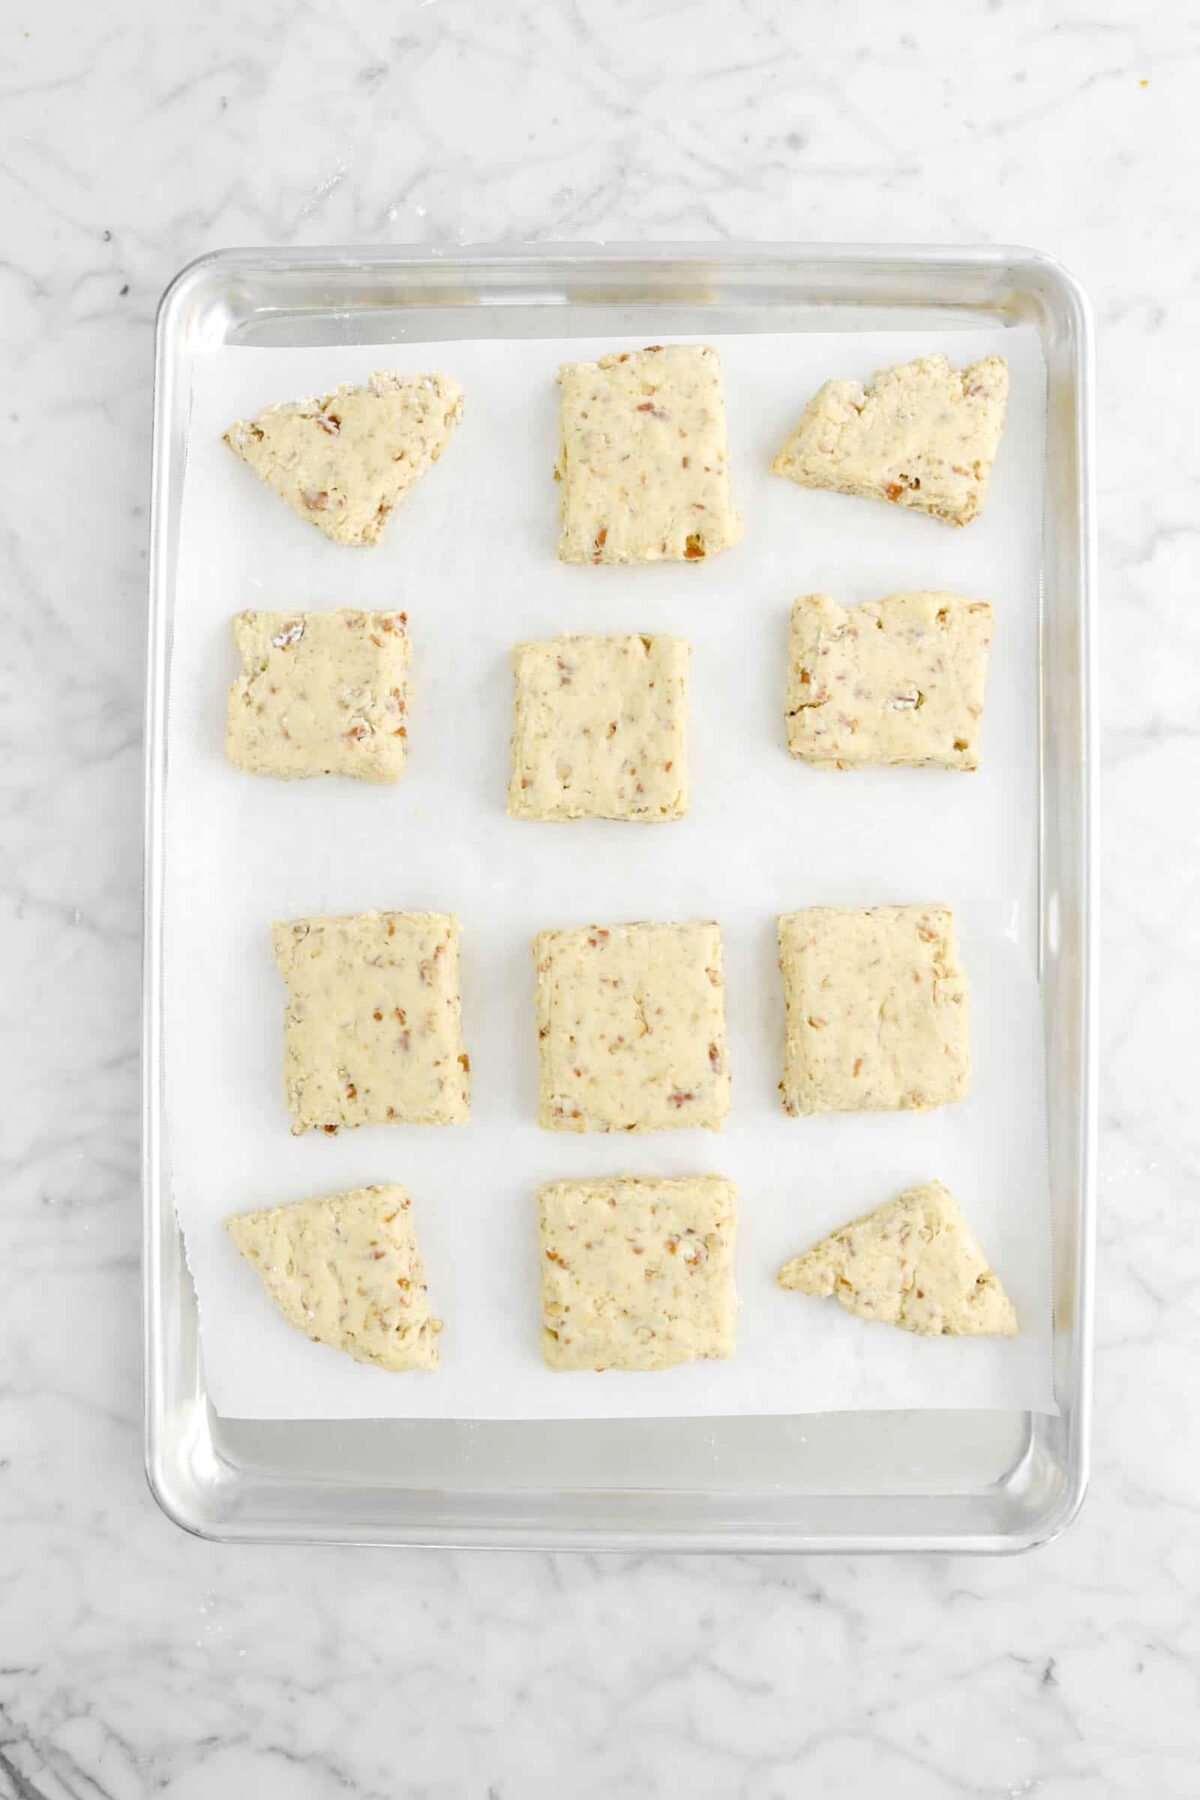 twelve unbaked scones on lined baking sheet